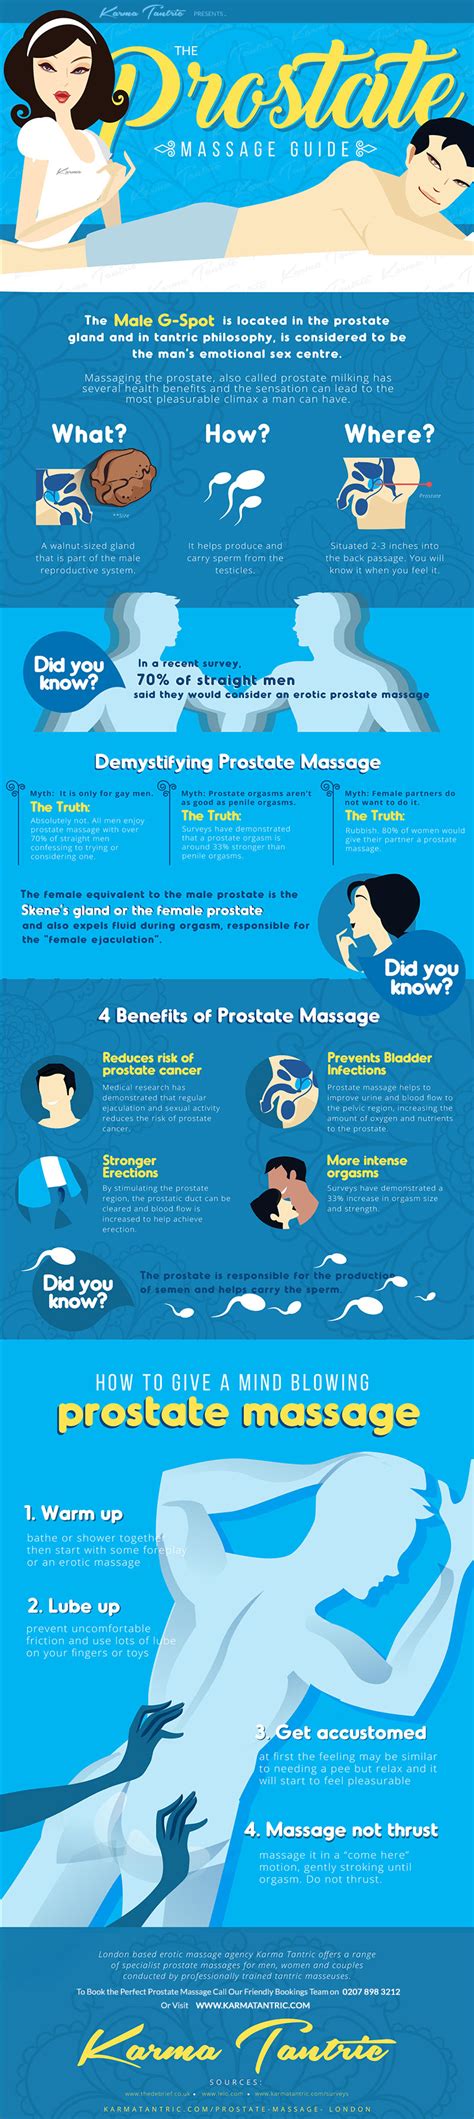 Prostate Milking Tips Positions To Massage The Prostate Kienitvc Ac Ke